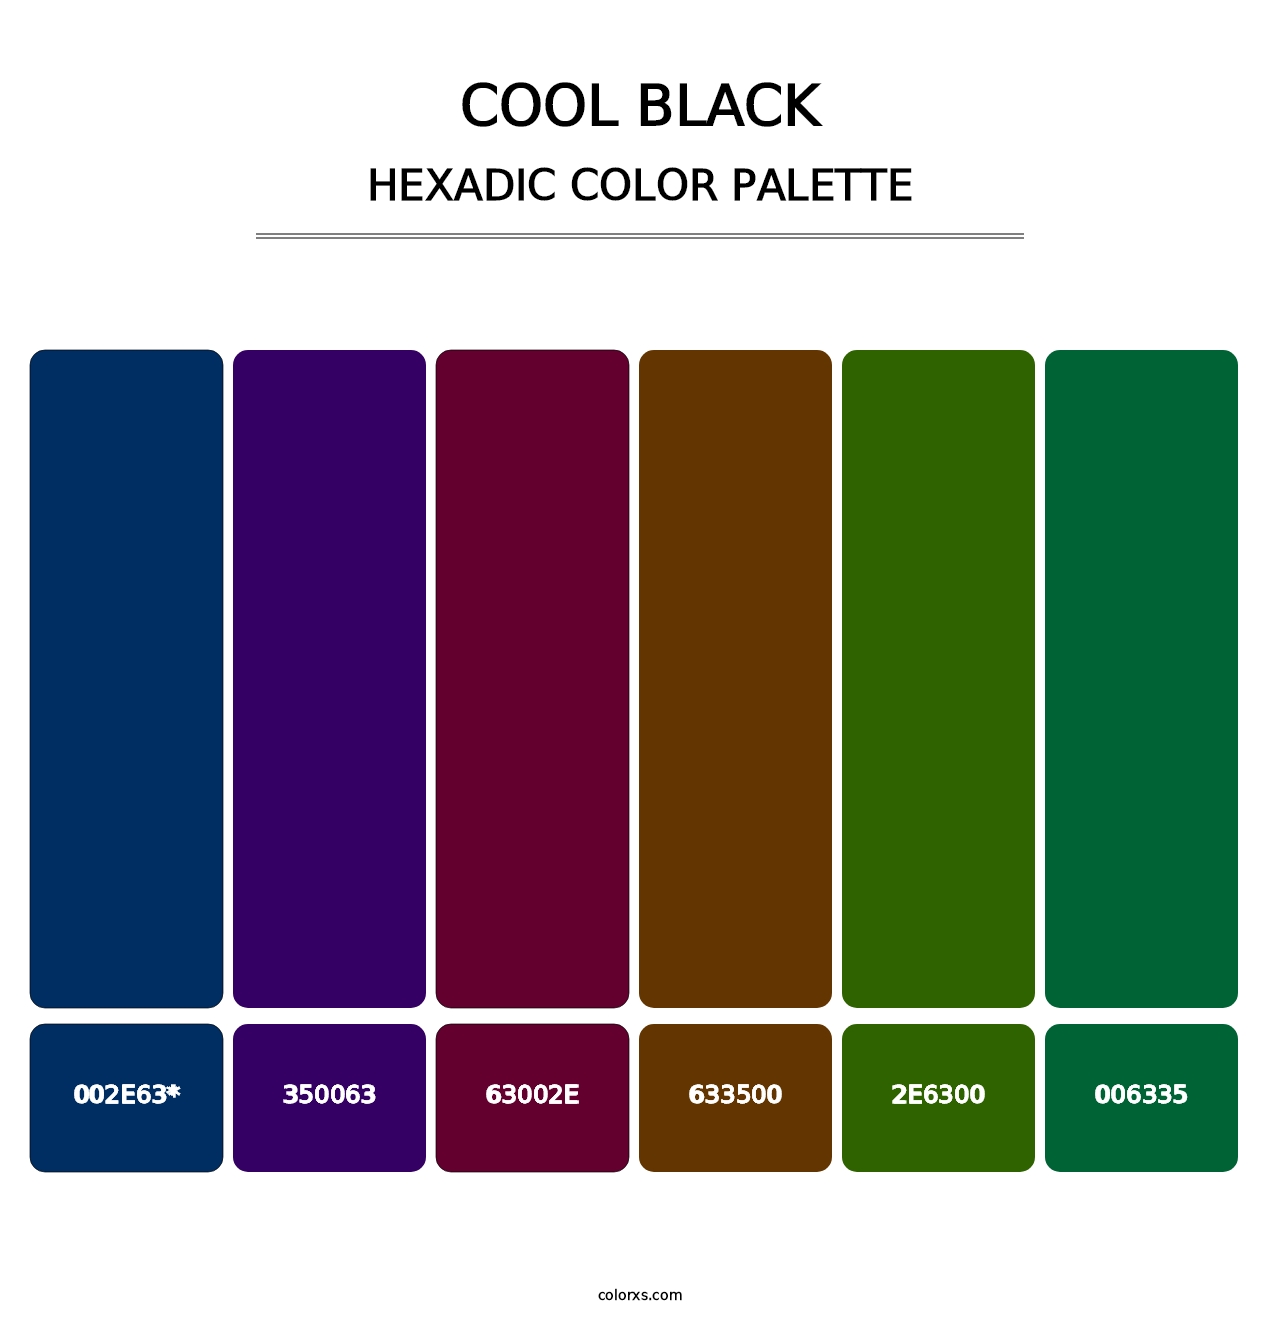 Cool Black - Hexadic Color Palette